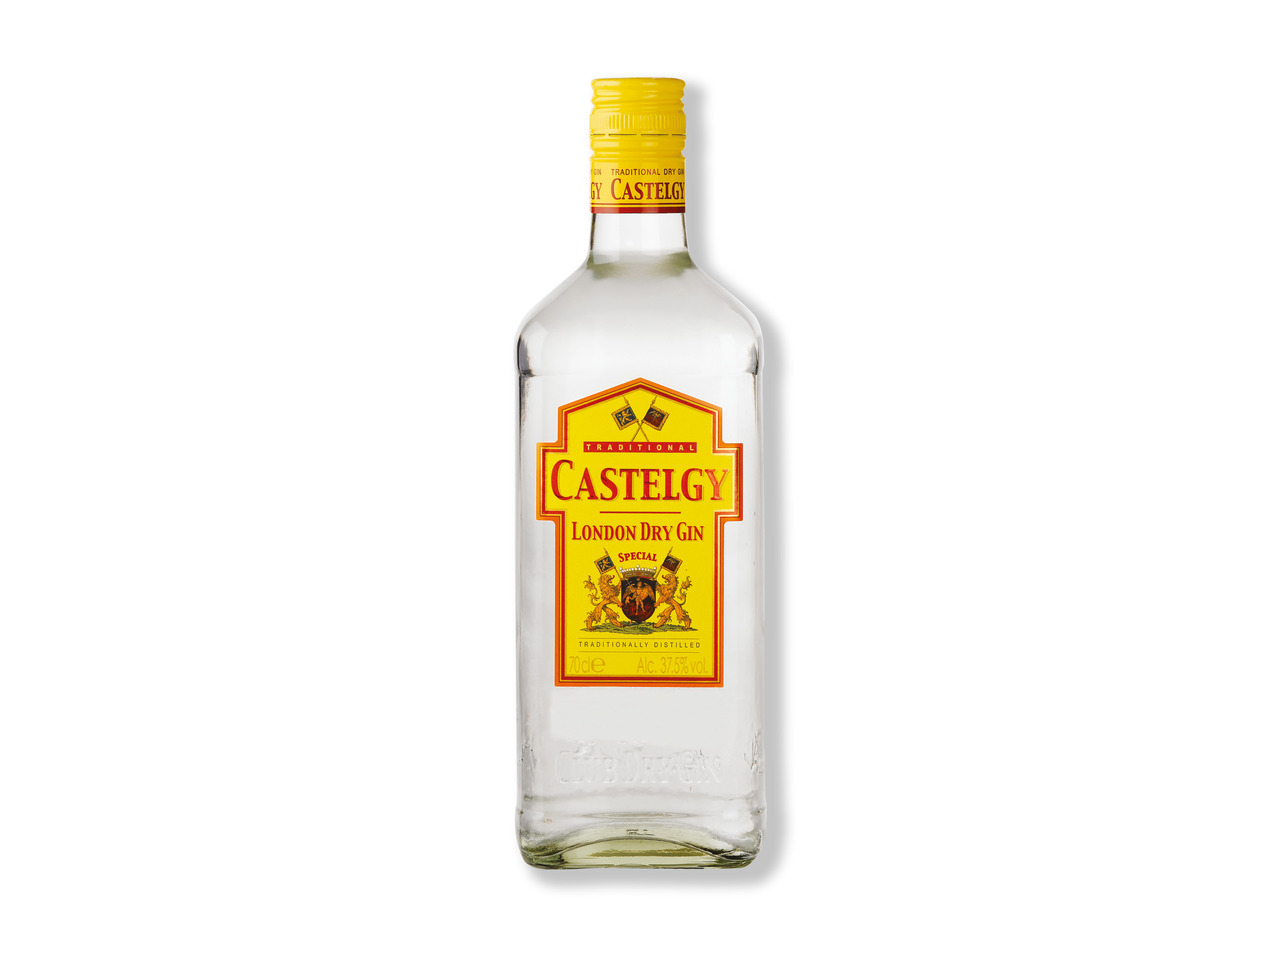 CASTELGY London dry gin 1